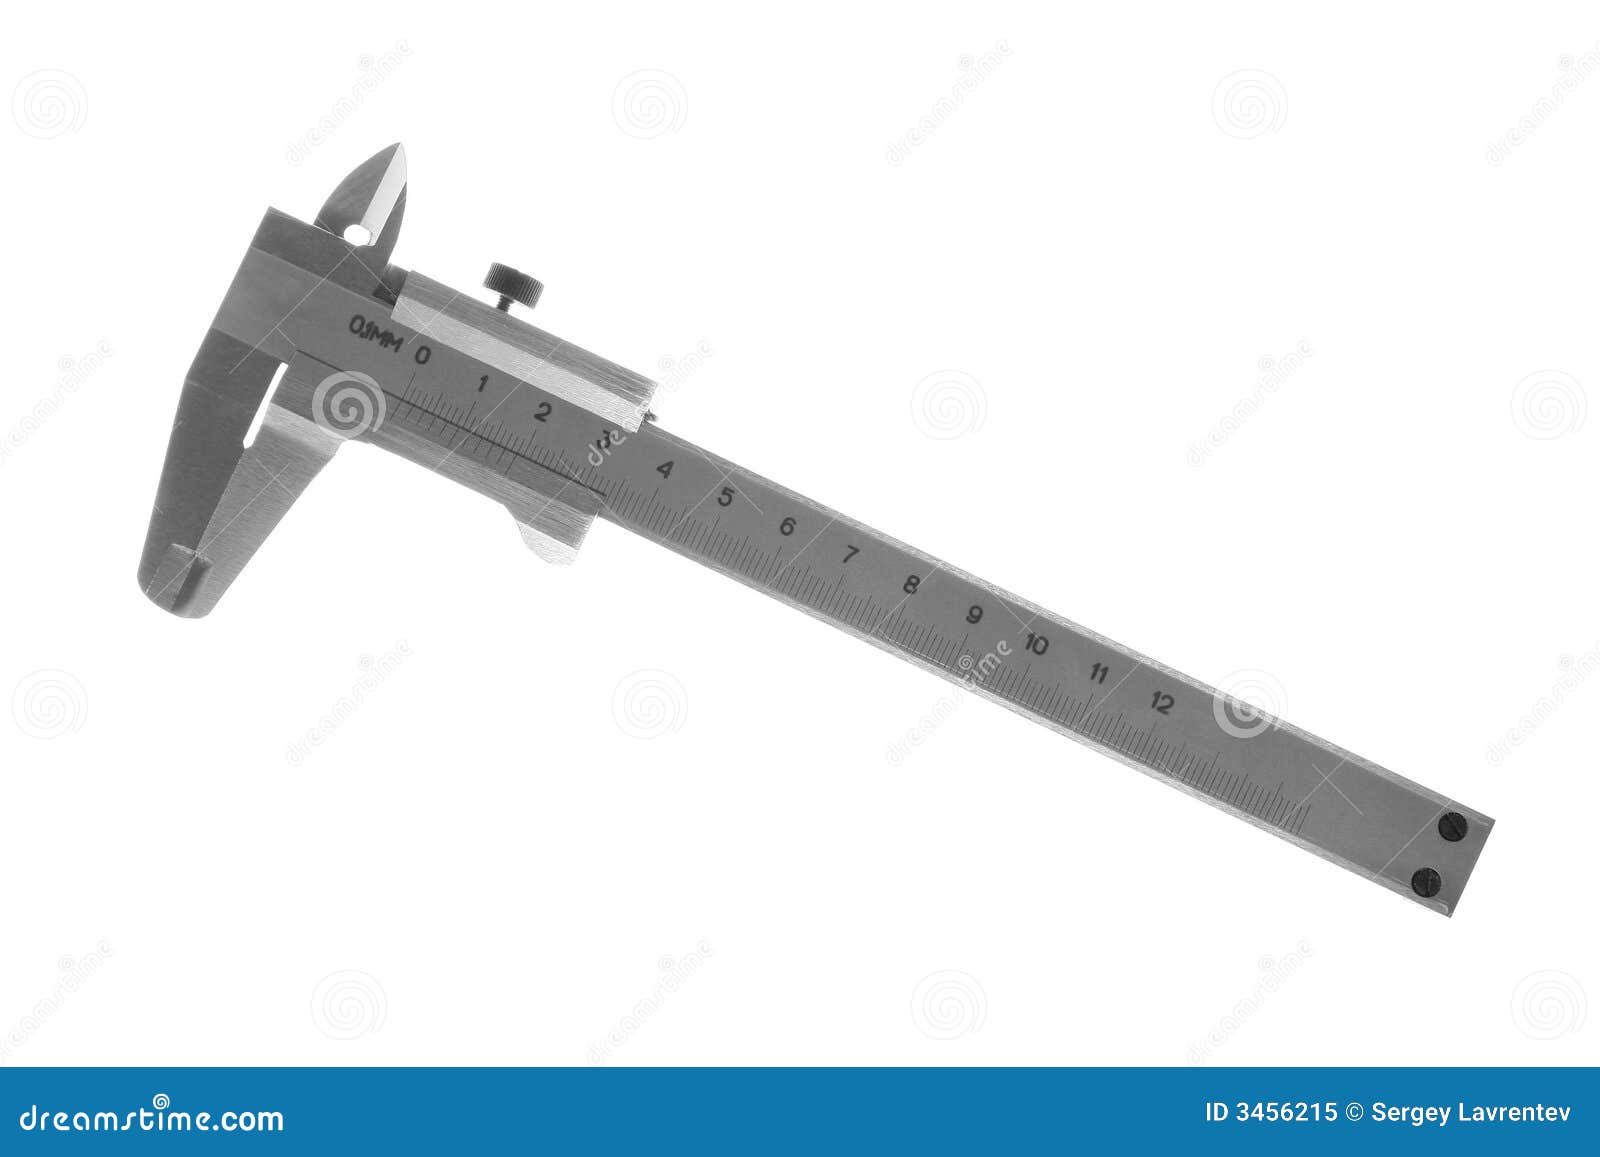 tool for precision measuring